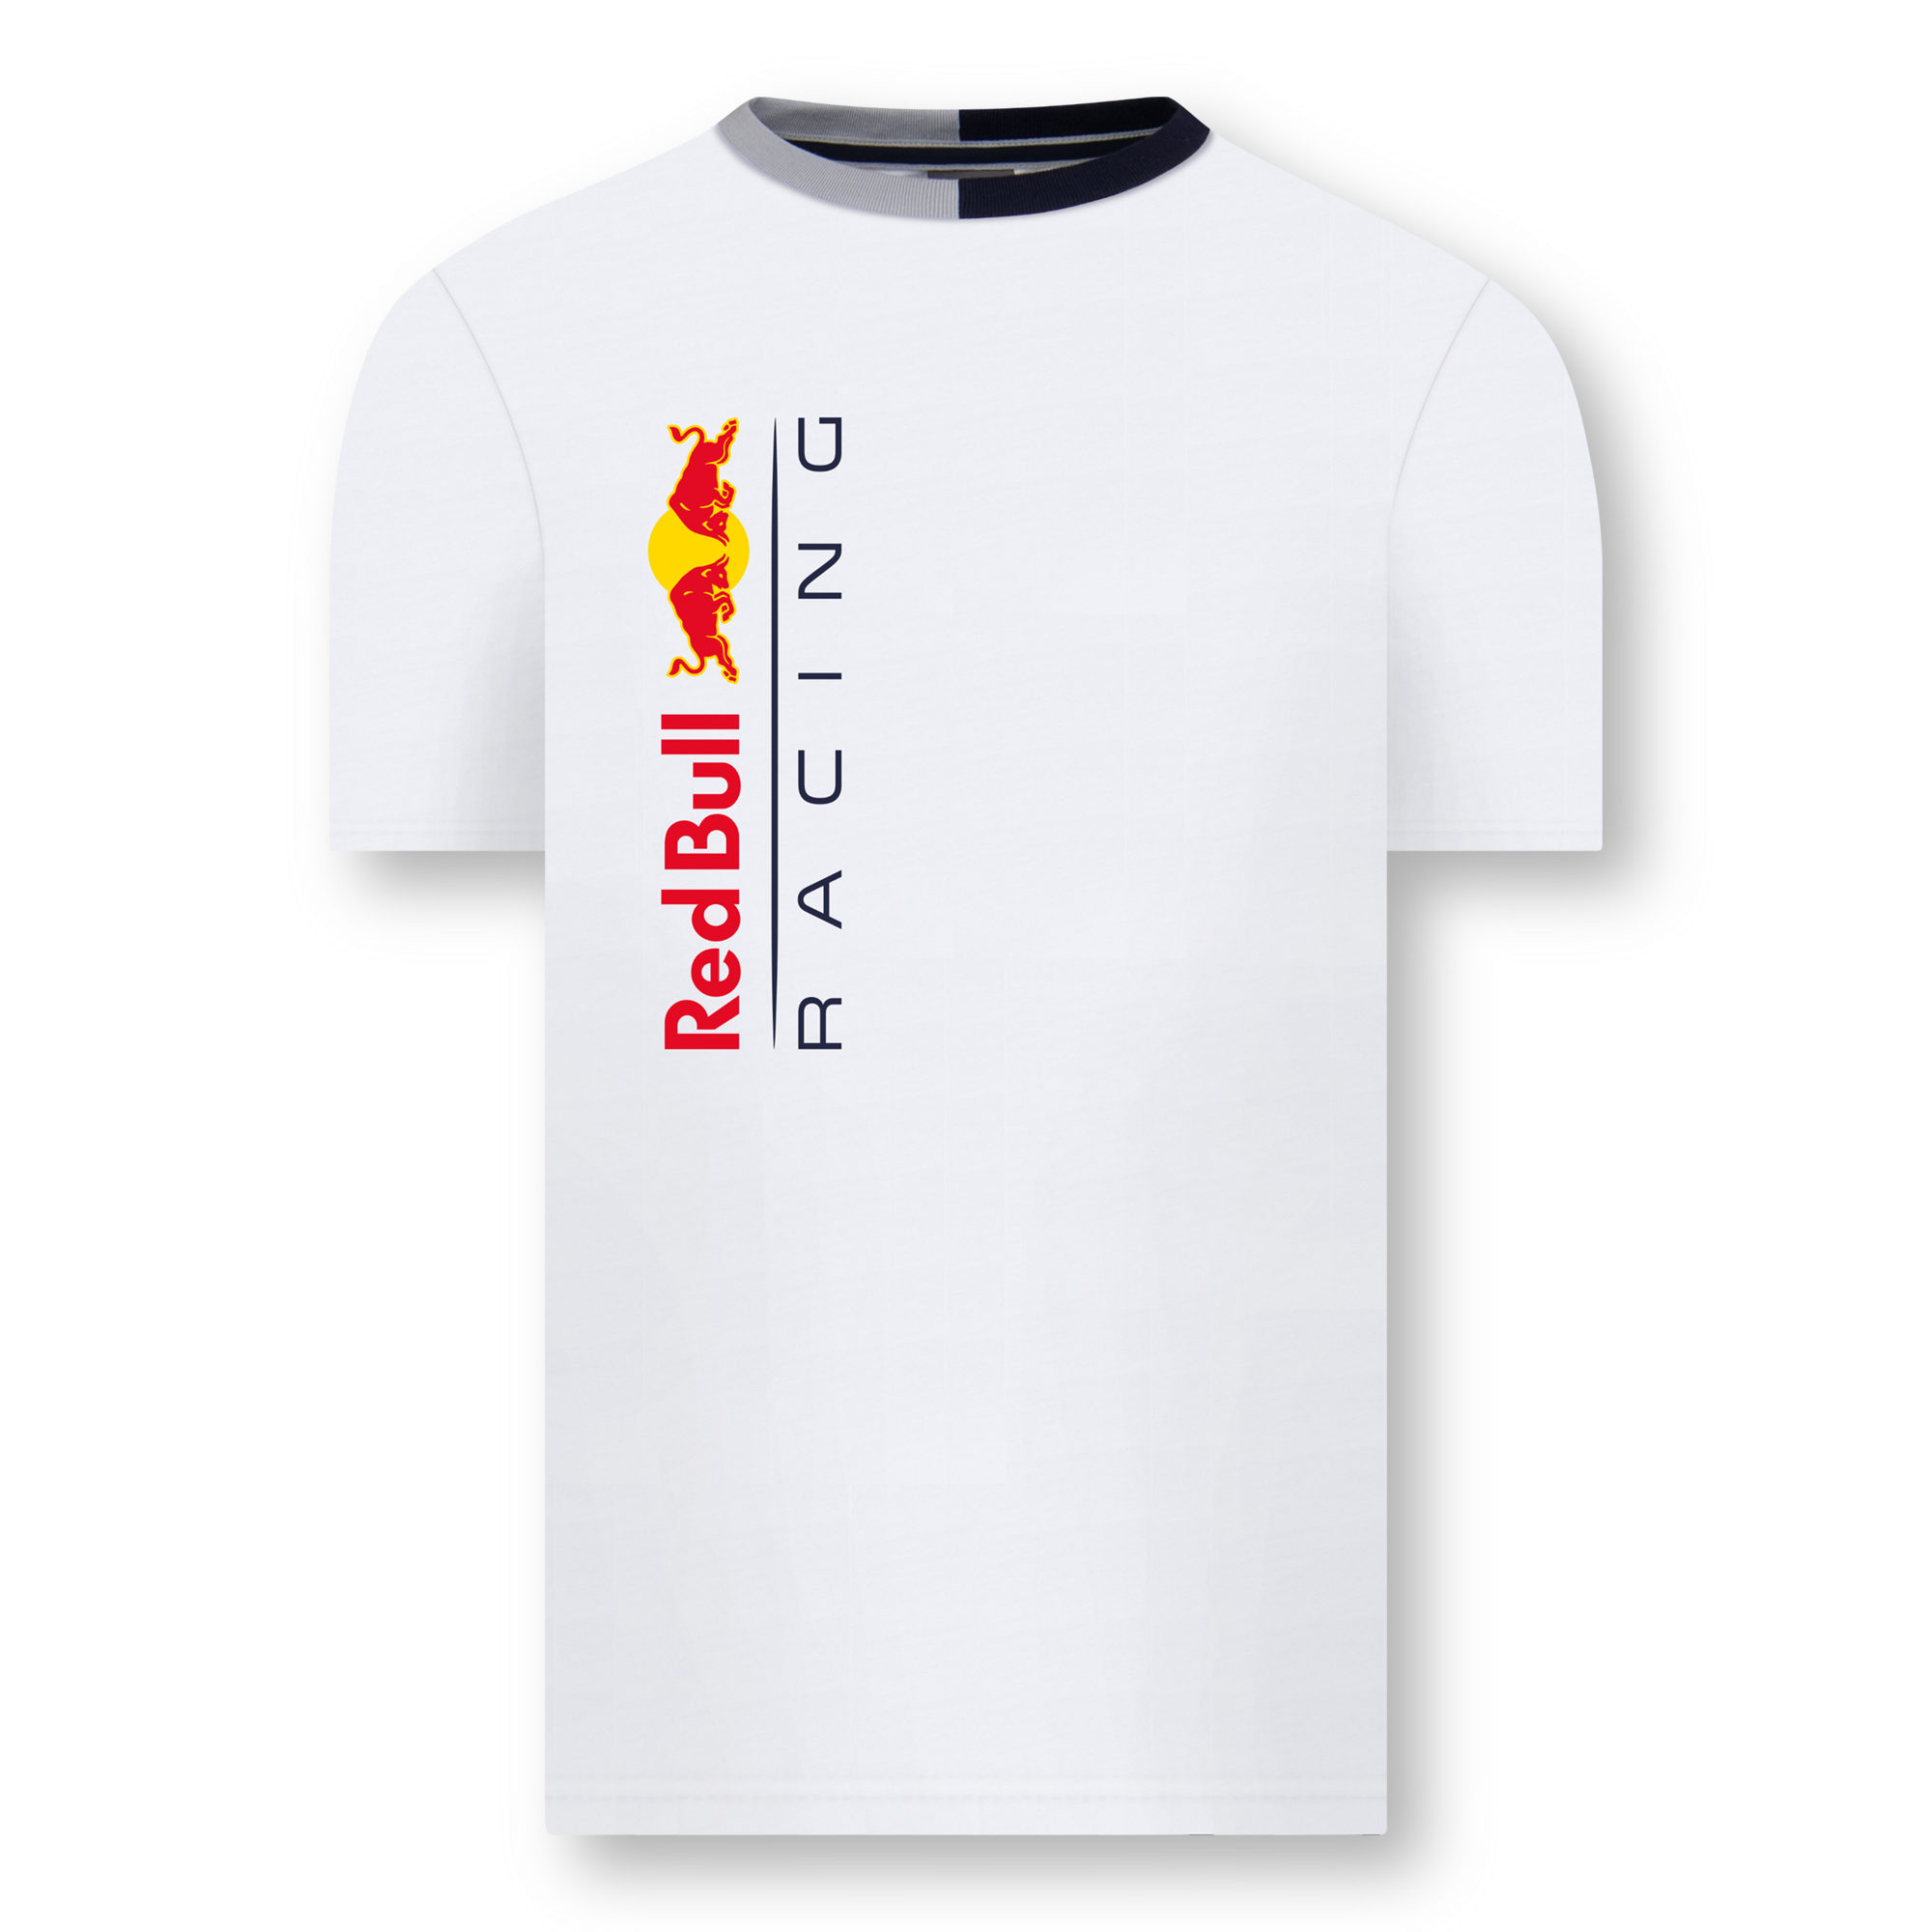 Red Bull Racing Balance T-Shirt